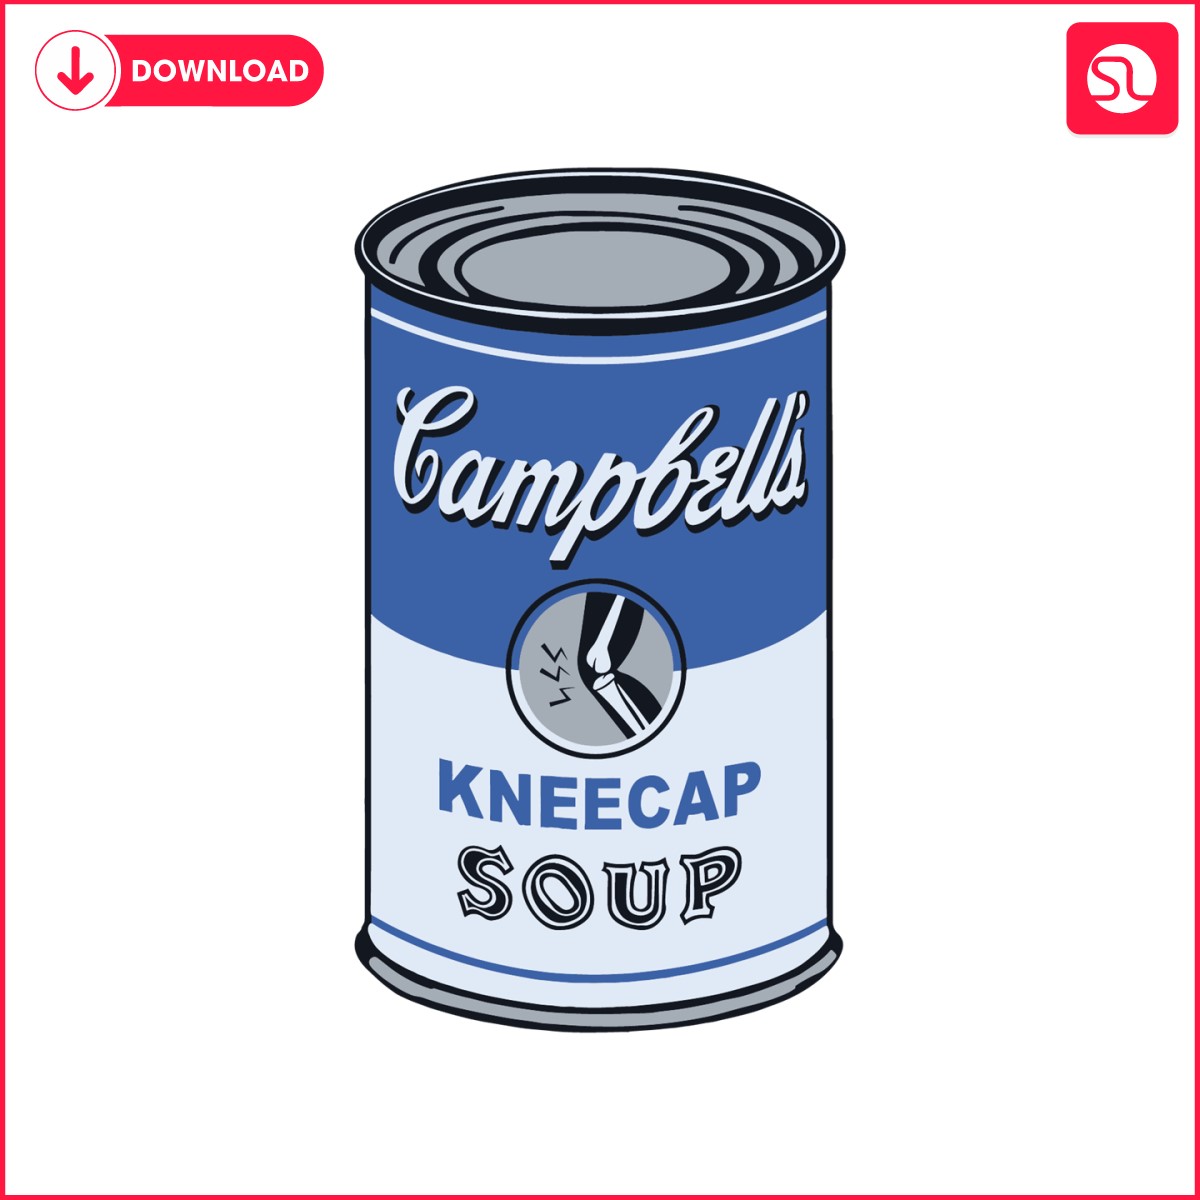 campbells-kneecap-soup-detroit-football-svg